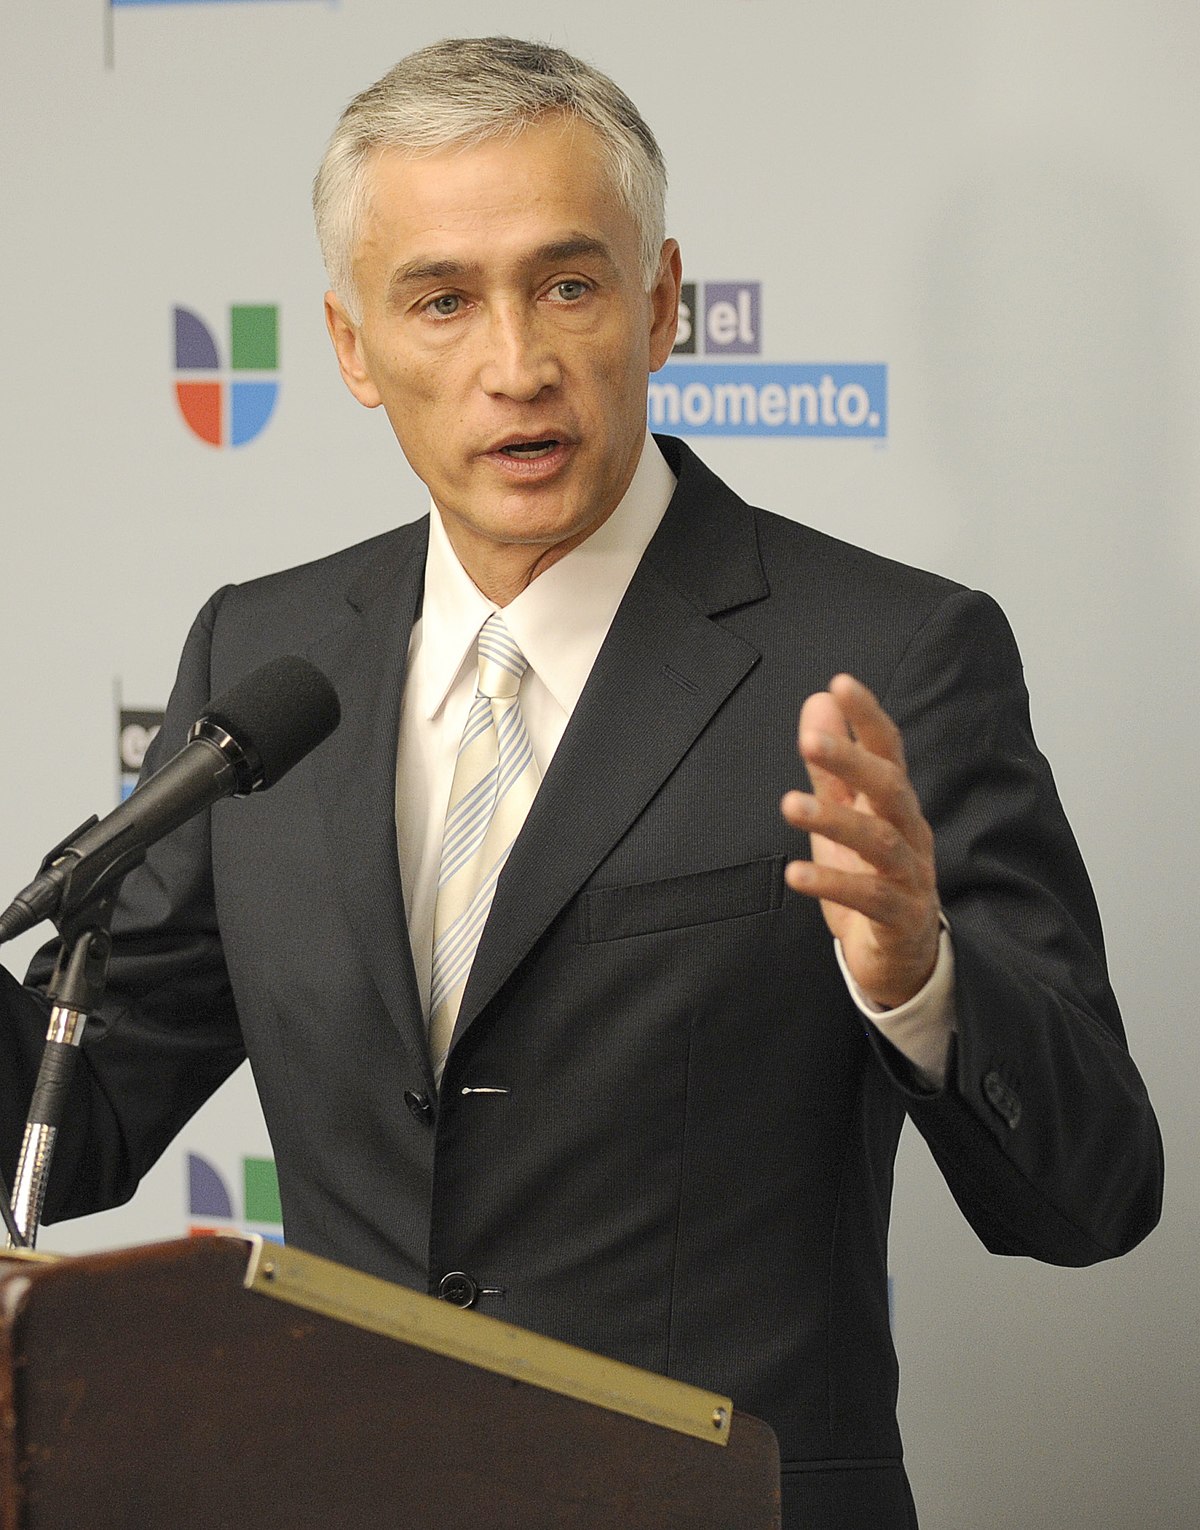 Jorge Ramos (news anchor) - Wikipedia